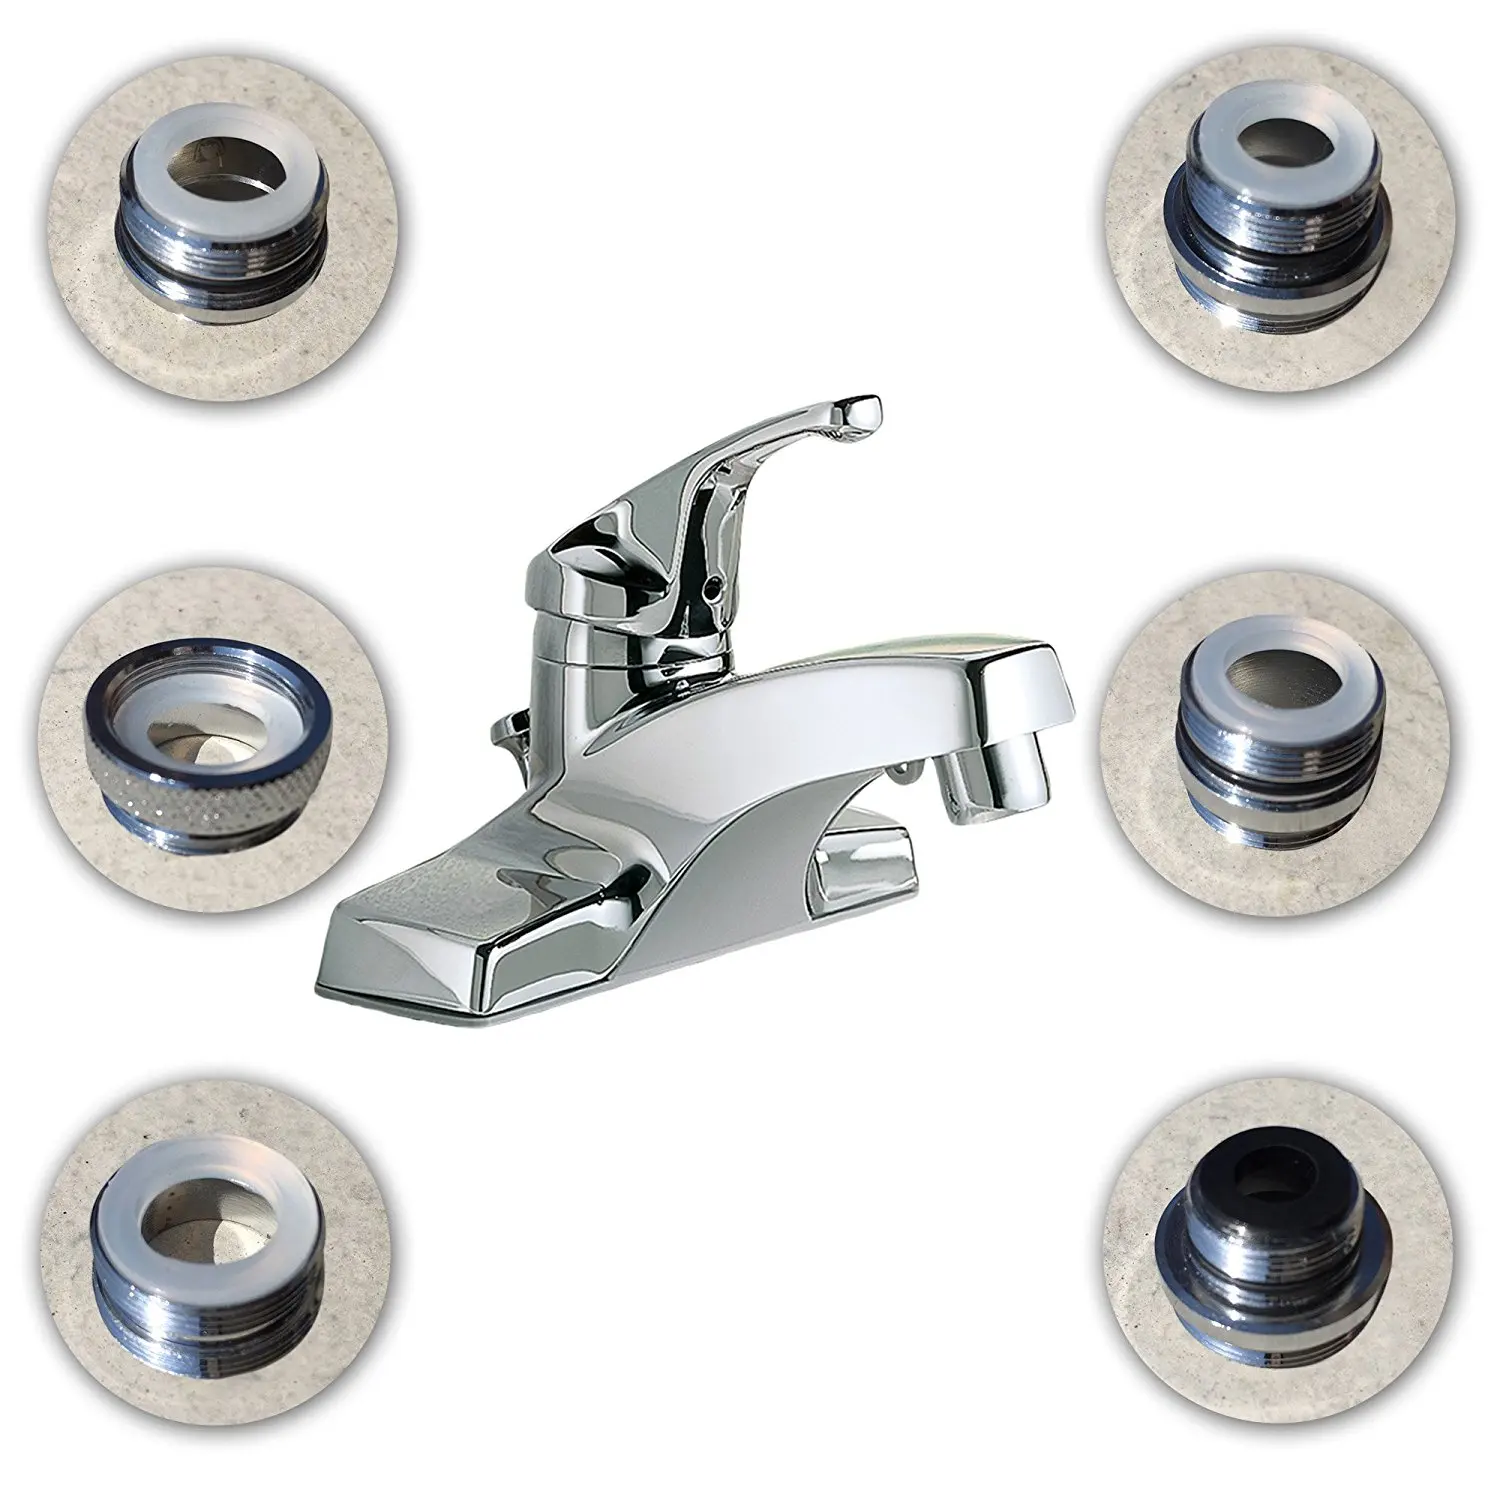 Cheap Sink Faucet Hose Adapter, find Sink Faucet Hose Adapter deals on